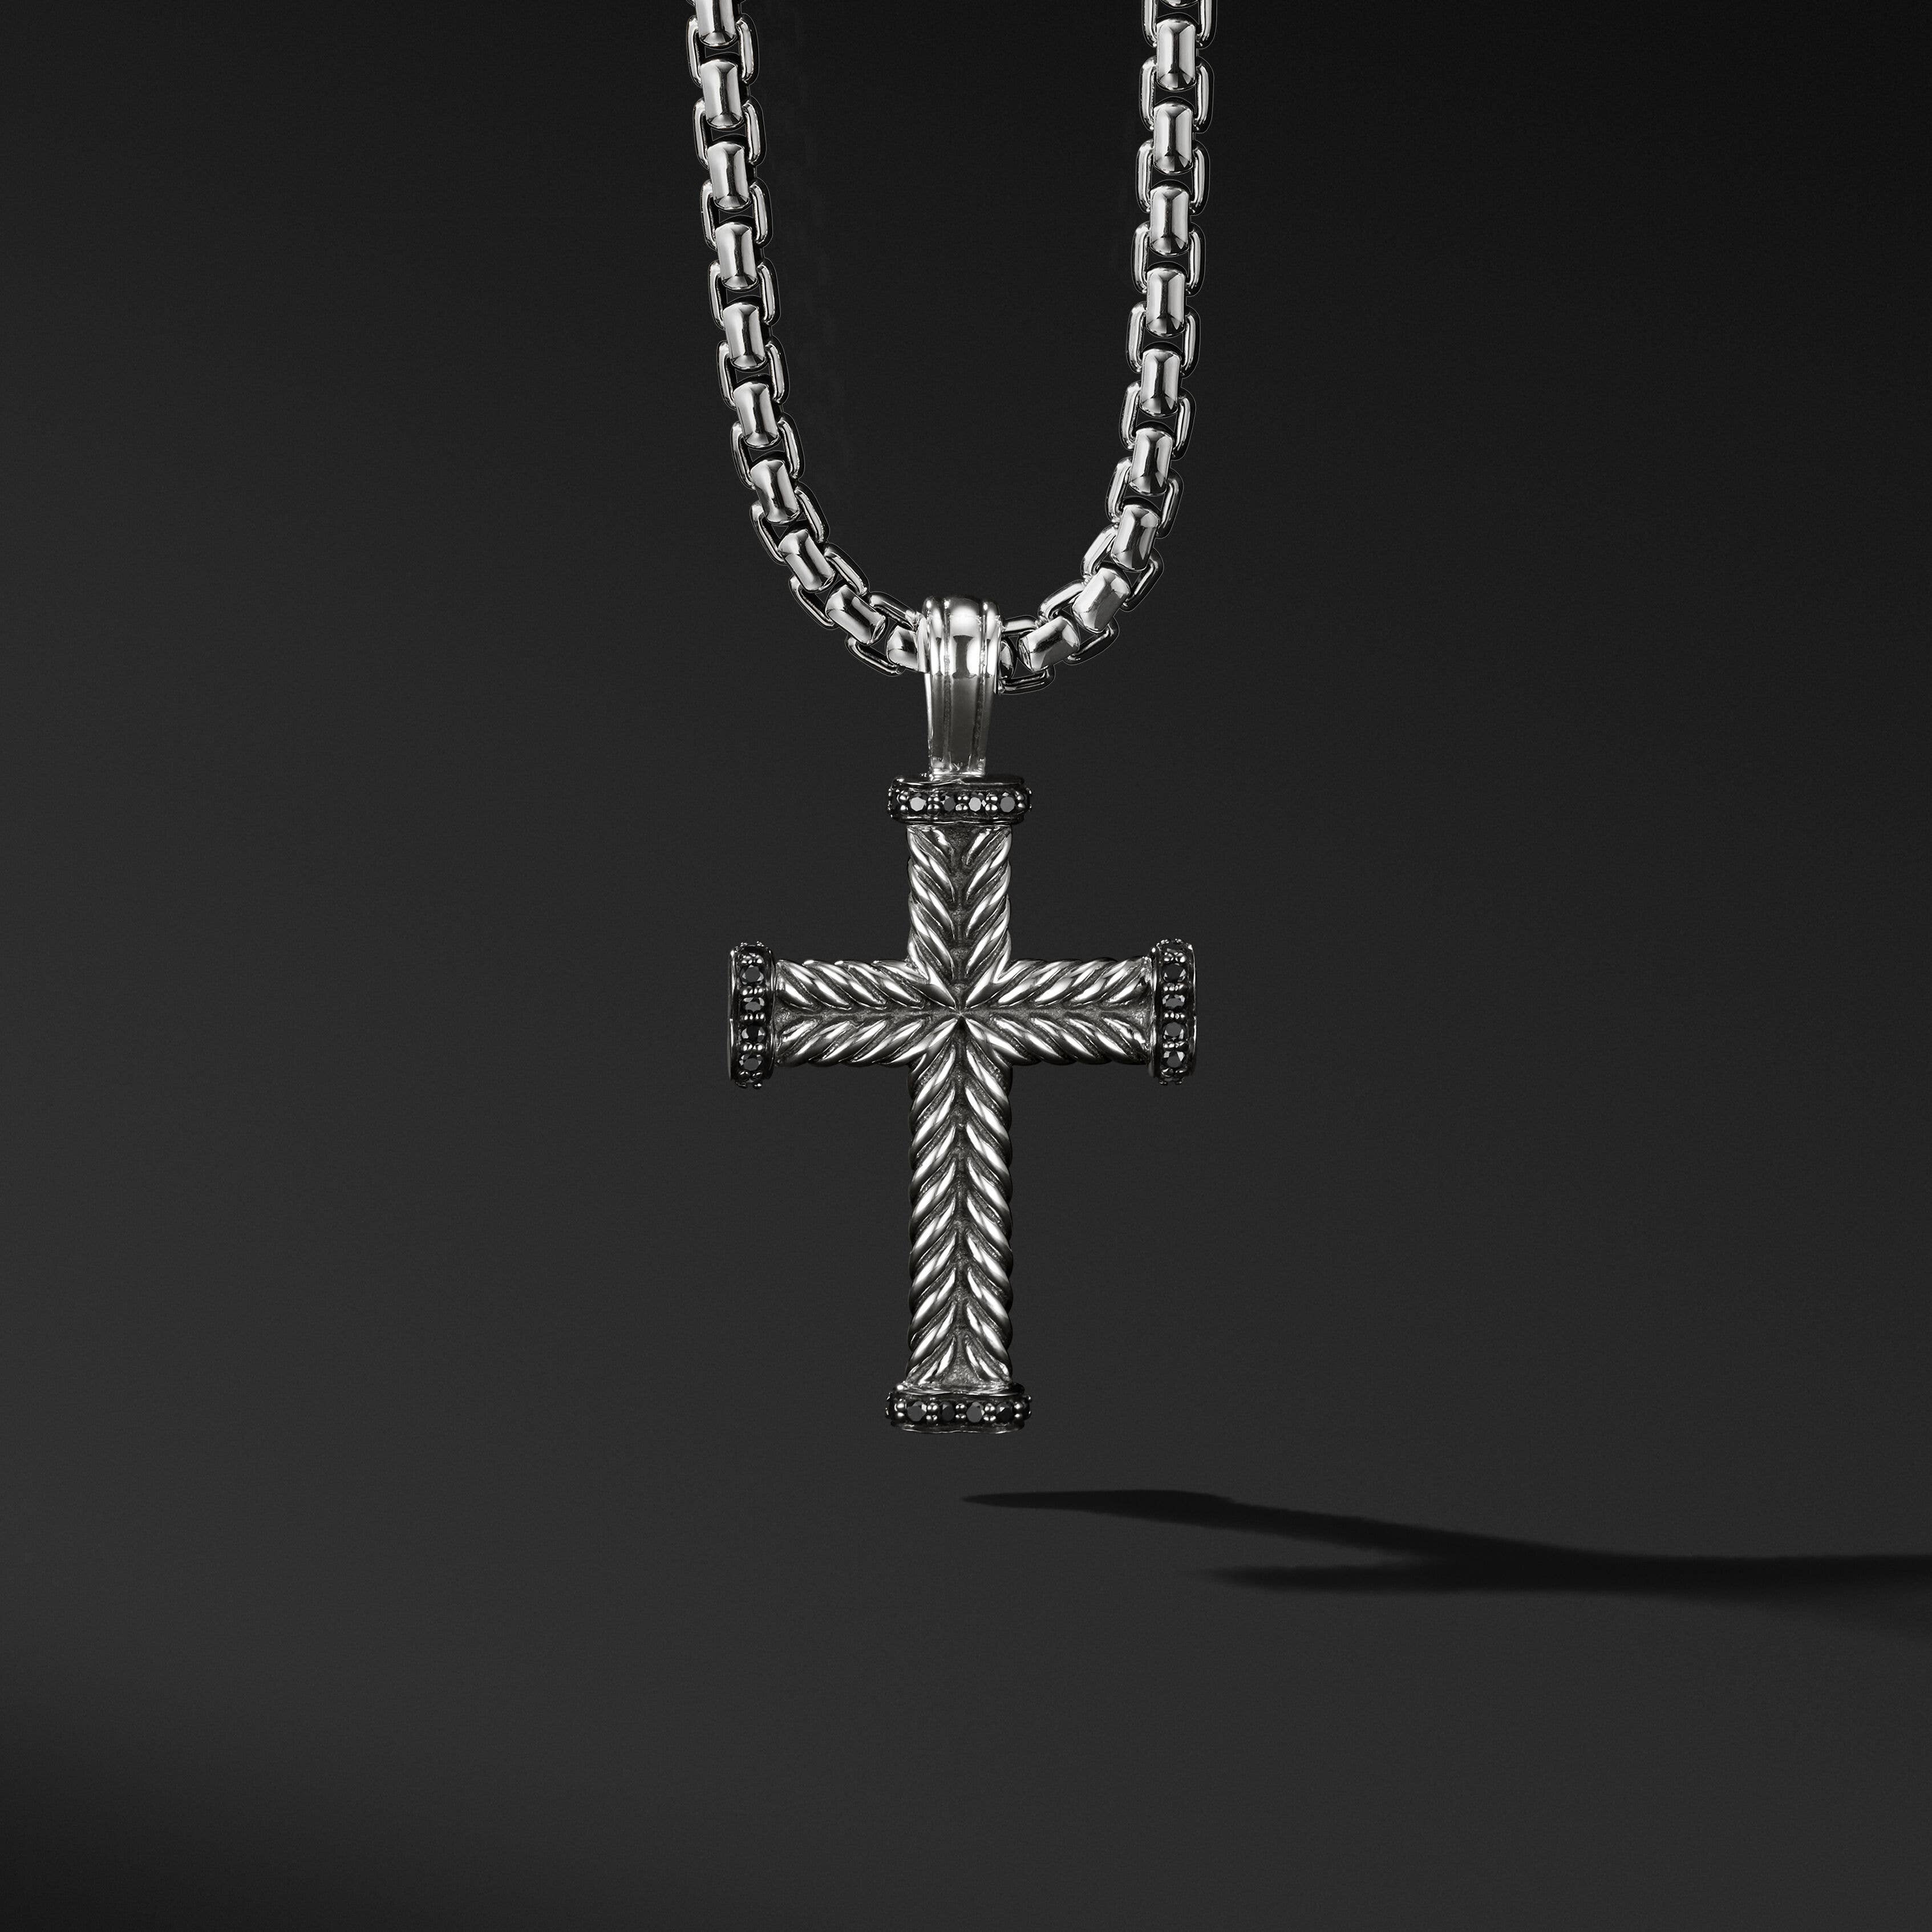 Chevron Cross Pendant in Sterling Silver with Pavé Black Diamonds